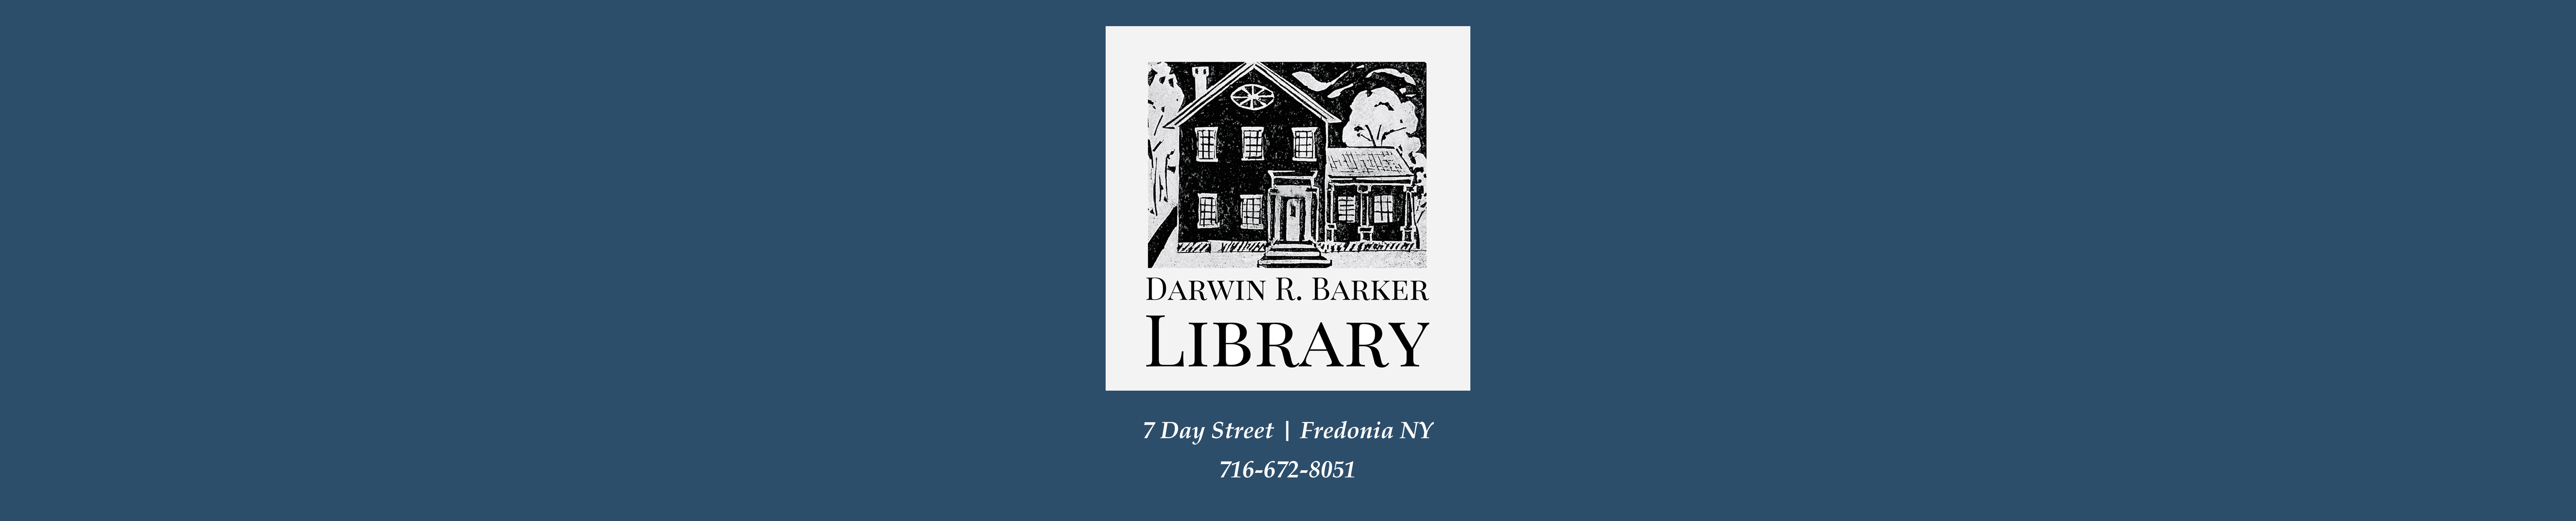 Darwin R. Barker Library